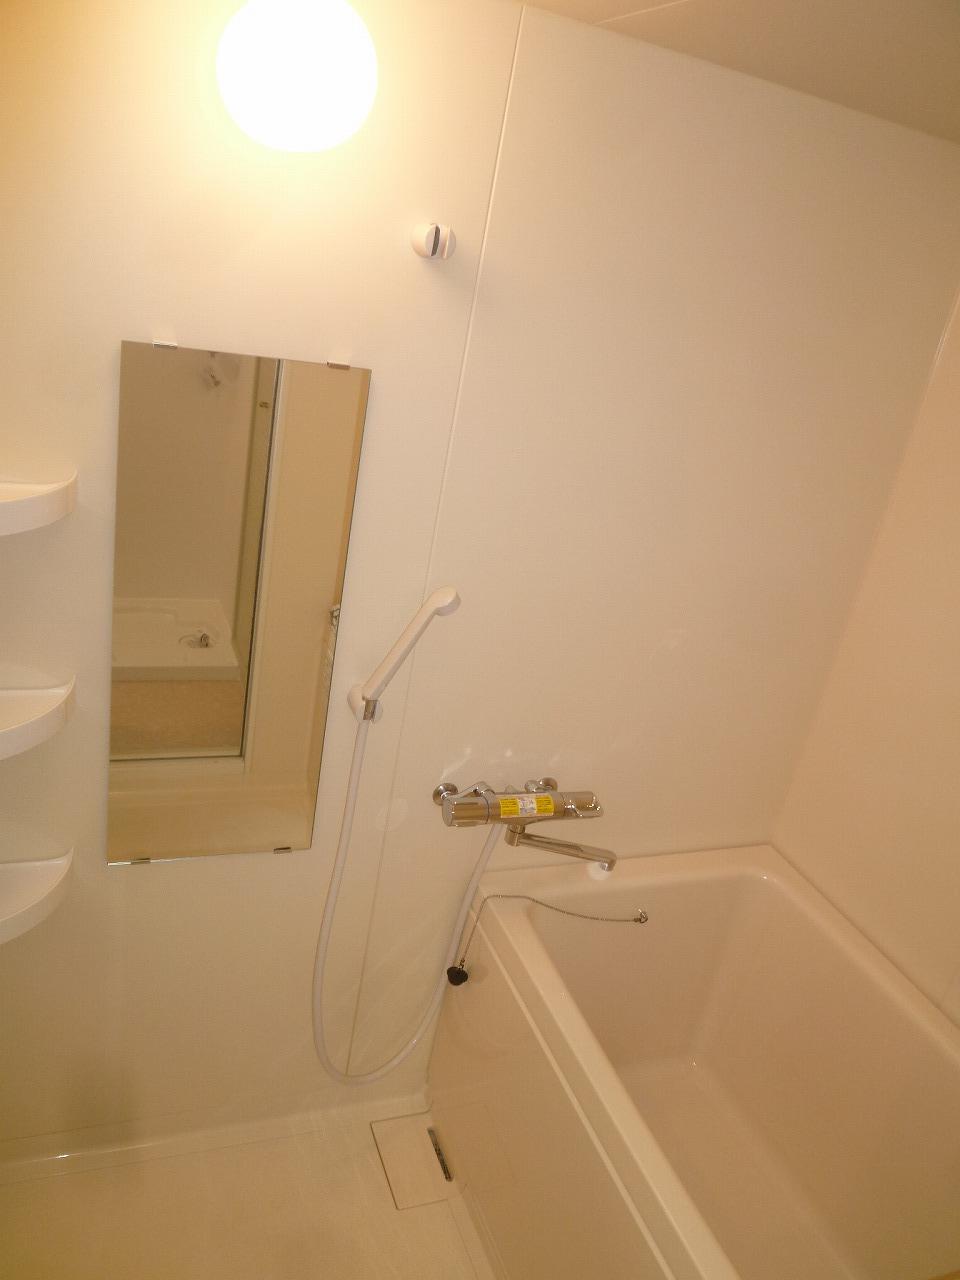 Bathroom.  ・ We bathtub had made  ・ It had made thermo shower faucet  ・ We had made corner shelf